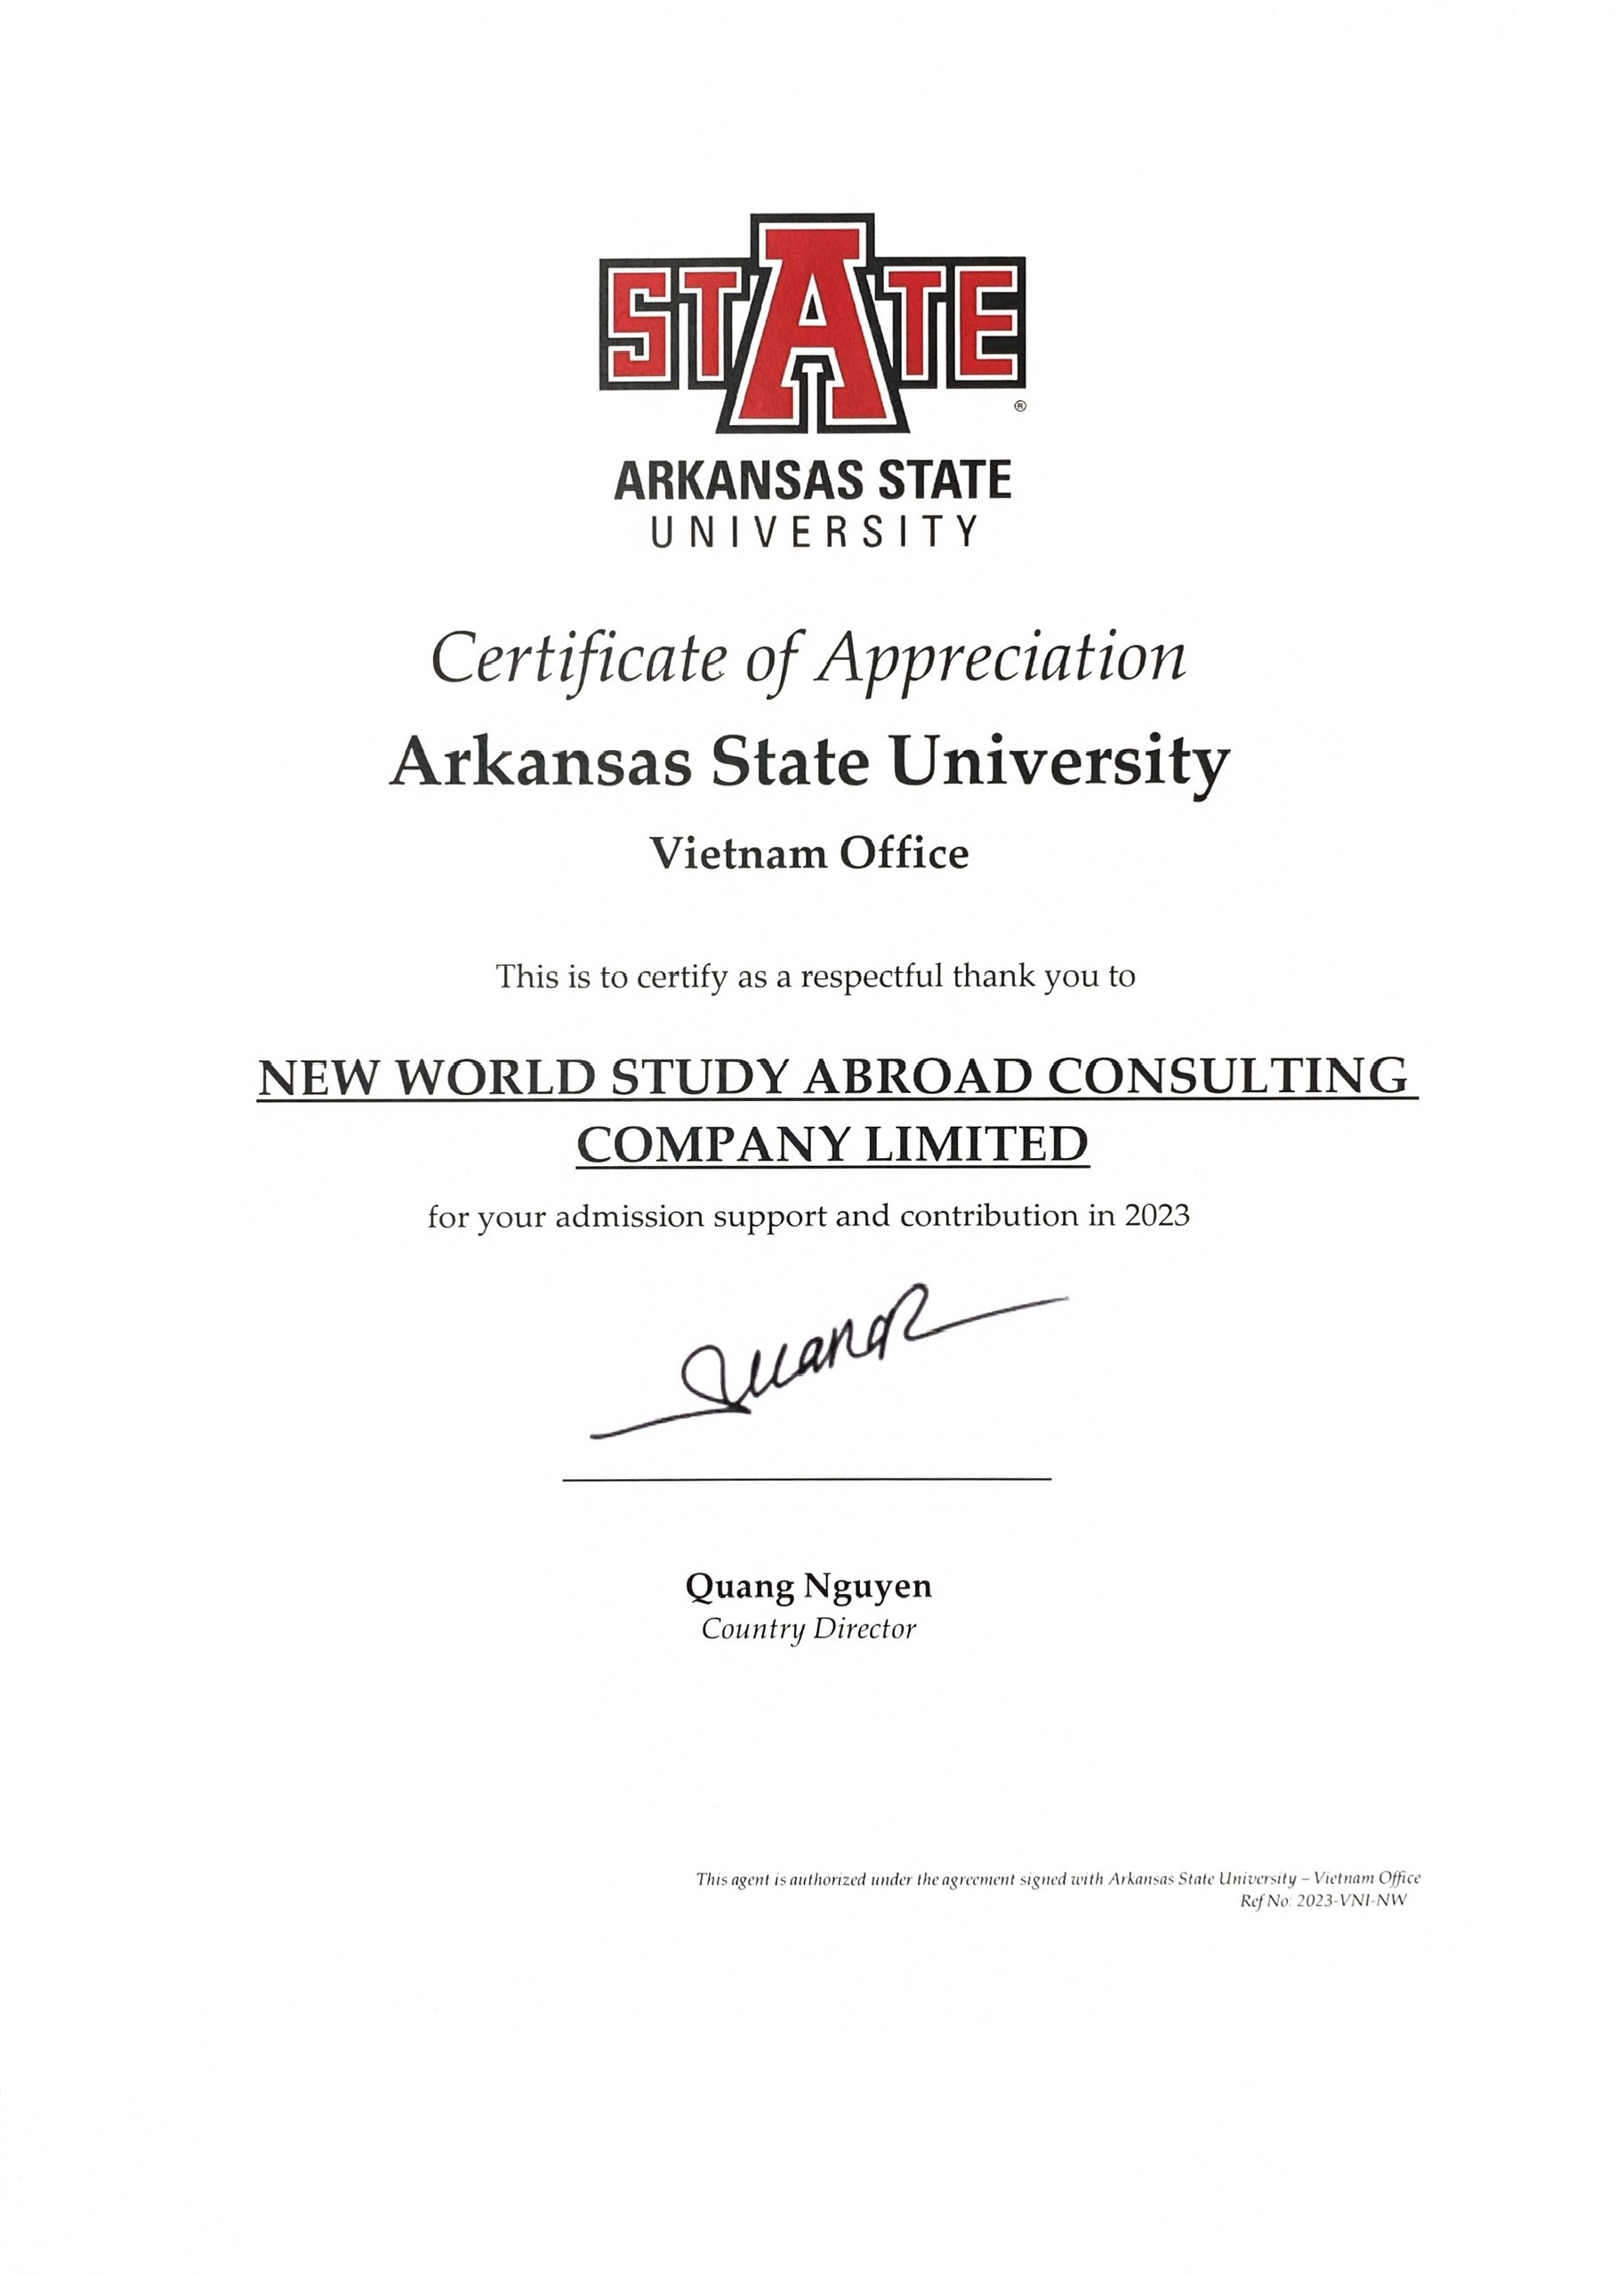 Certificate of Appreciation từ Arkansas State University, Mỹ